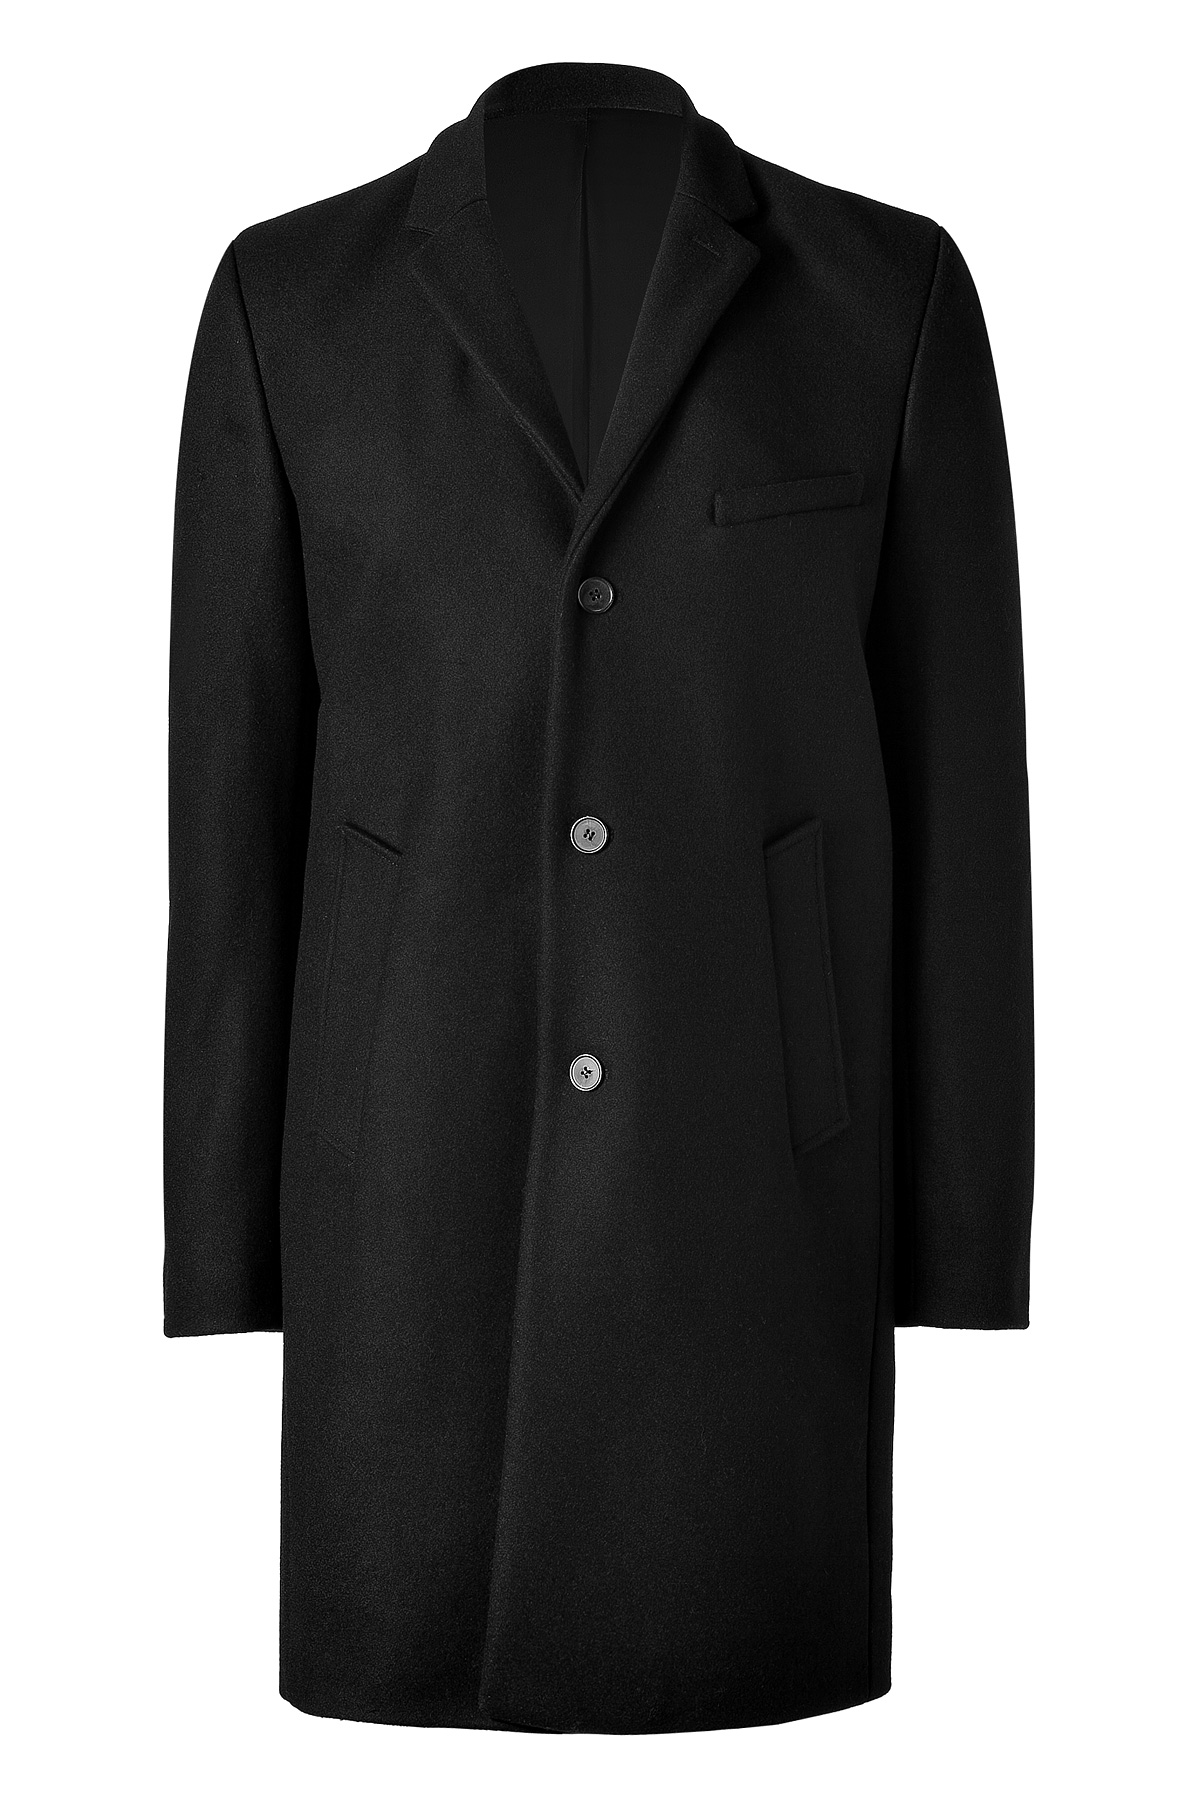 Lyst - Sandro Black Classic Wool Coat in Black for Men